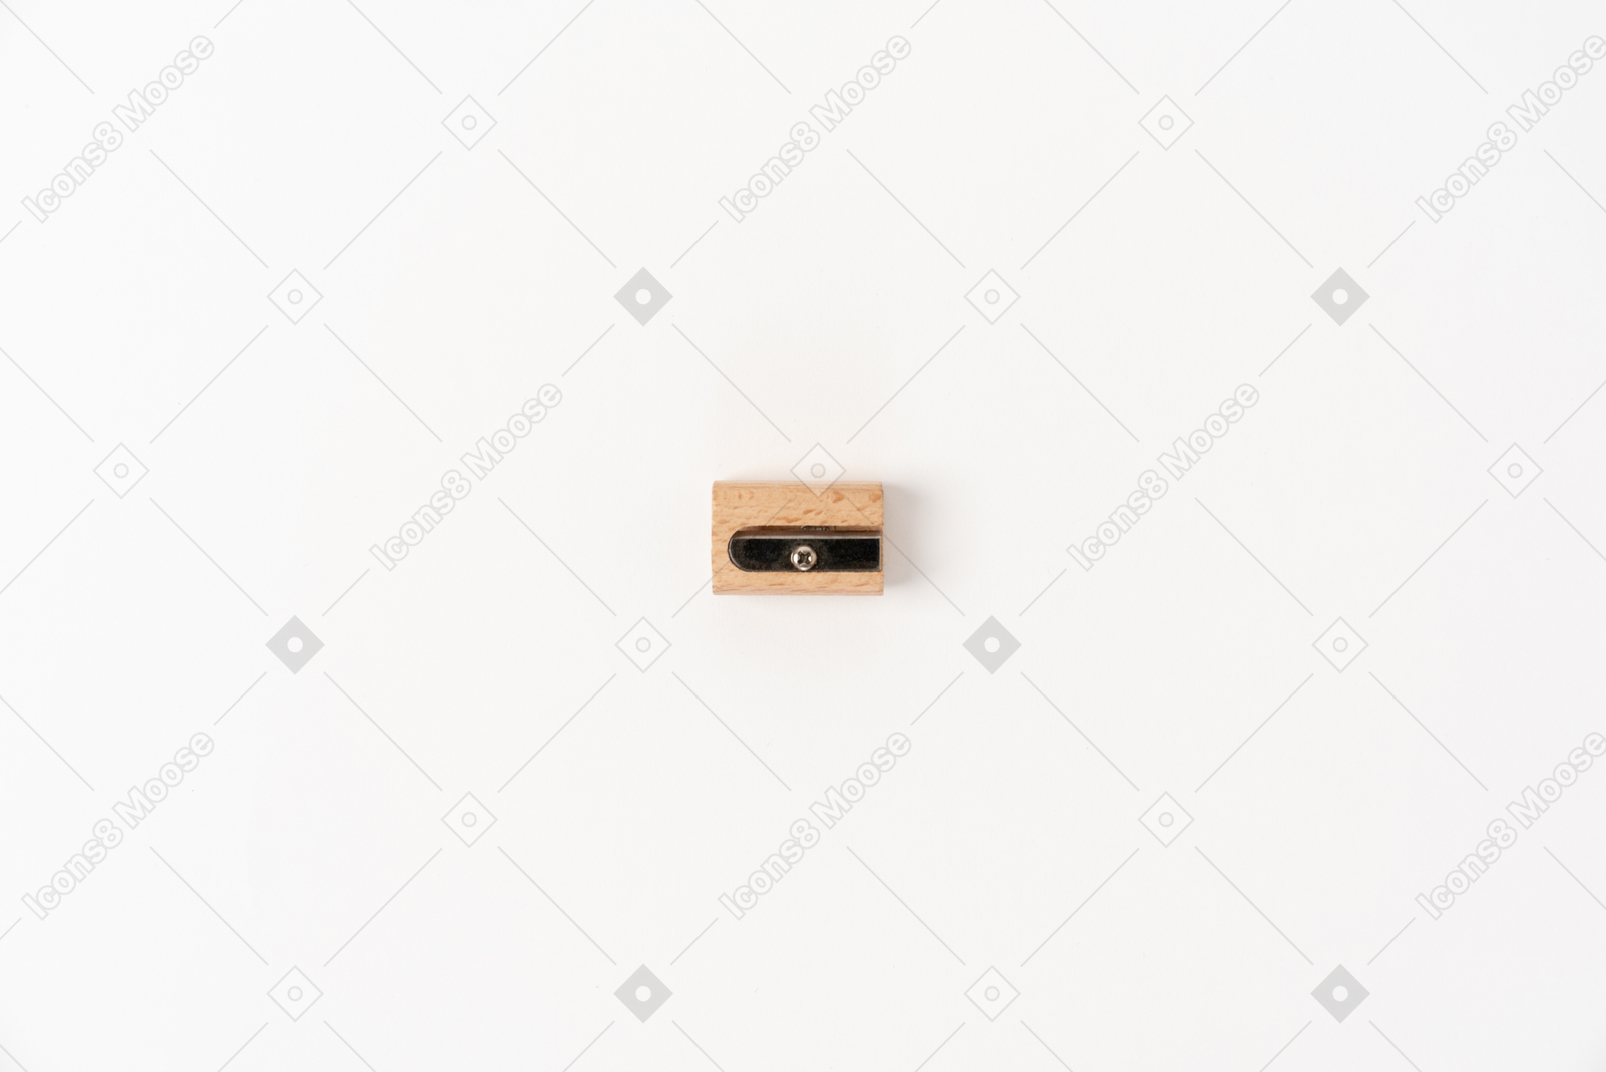 Wooden pencil sharpener on white background